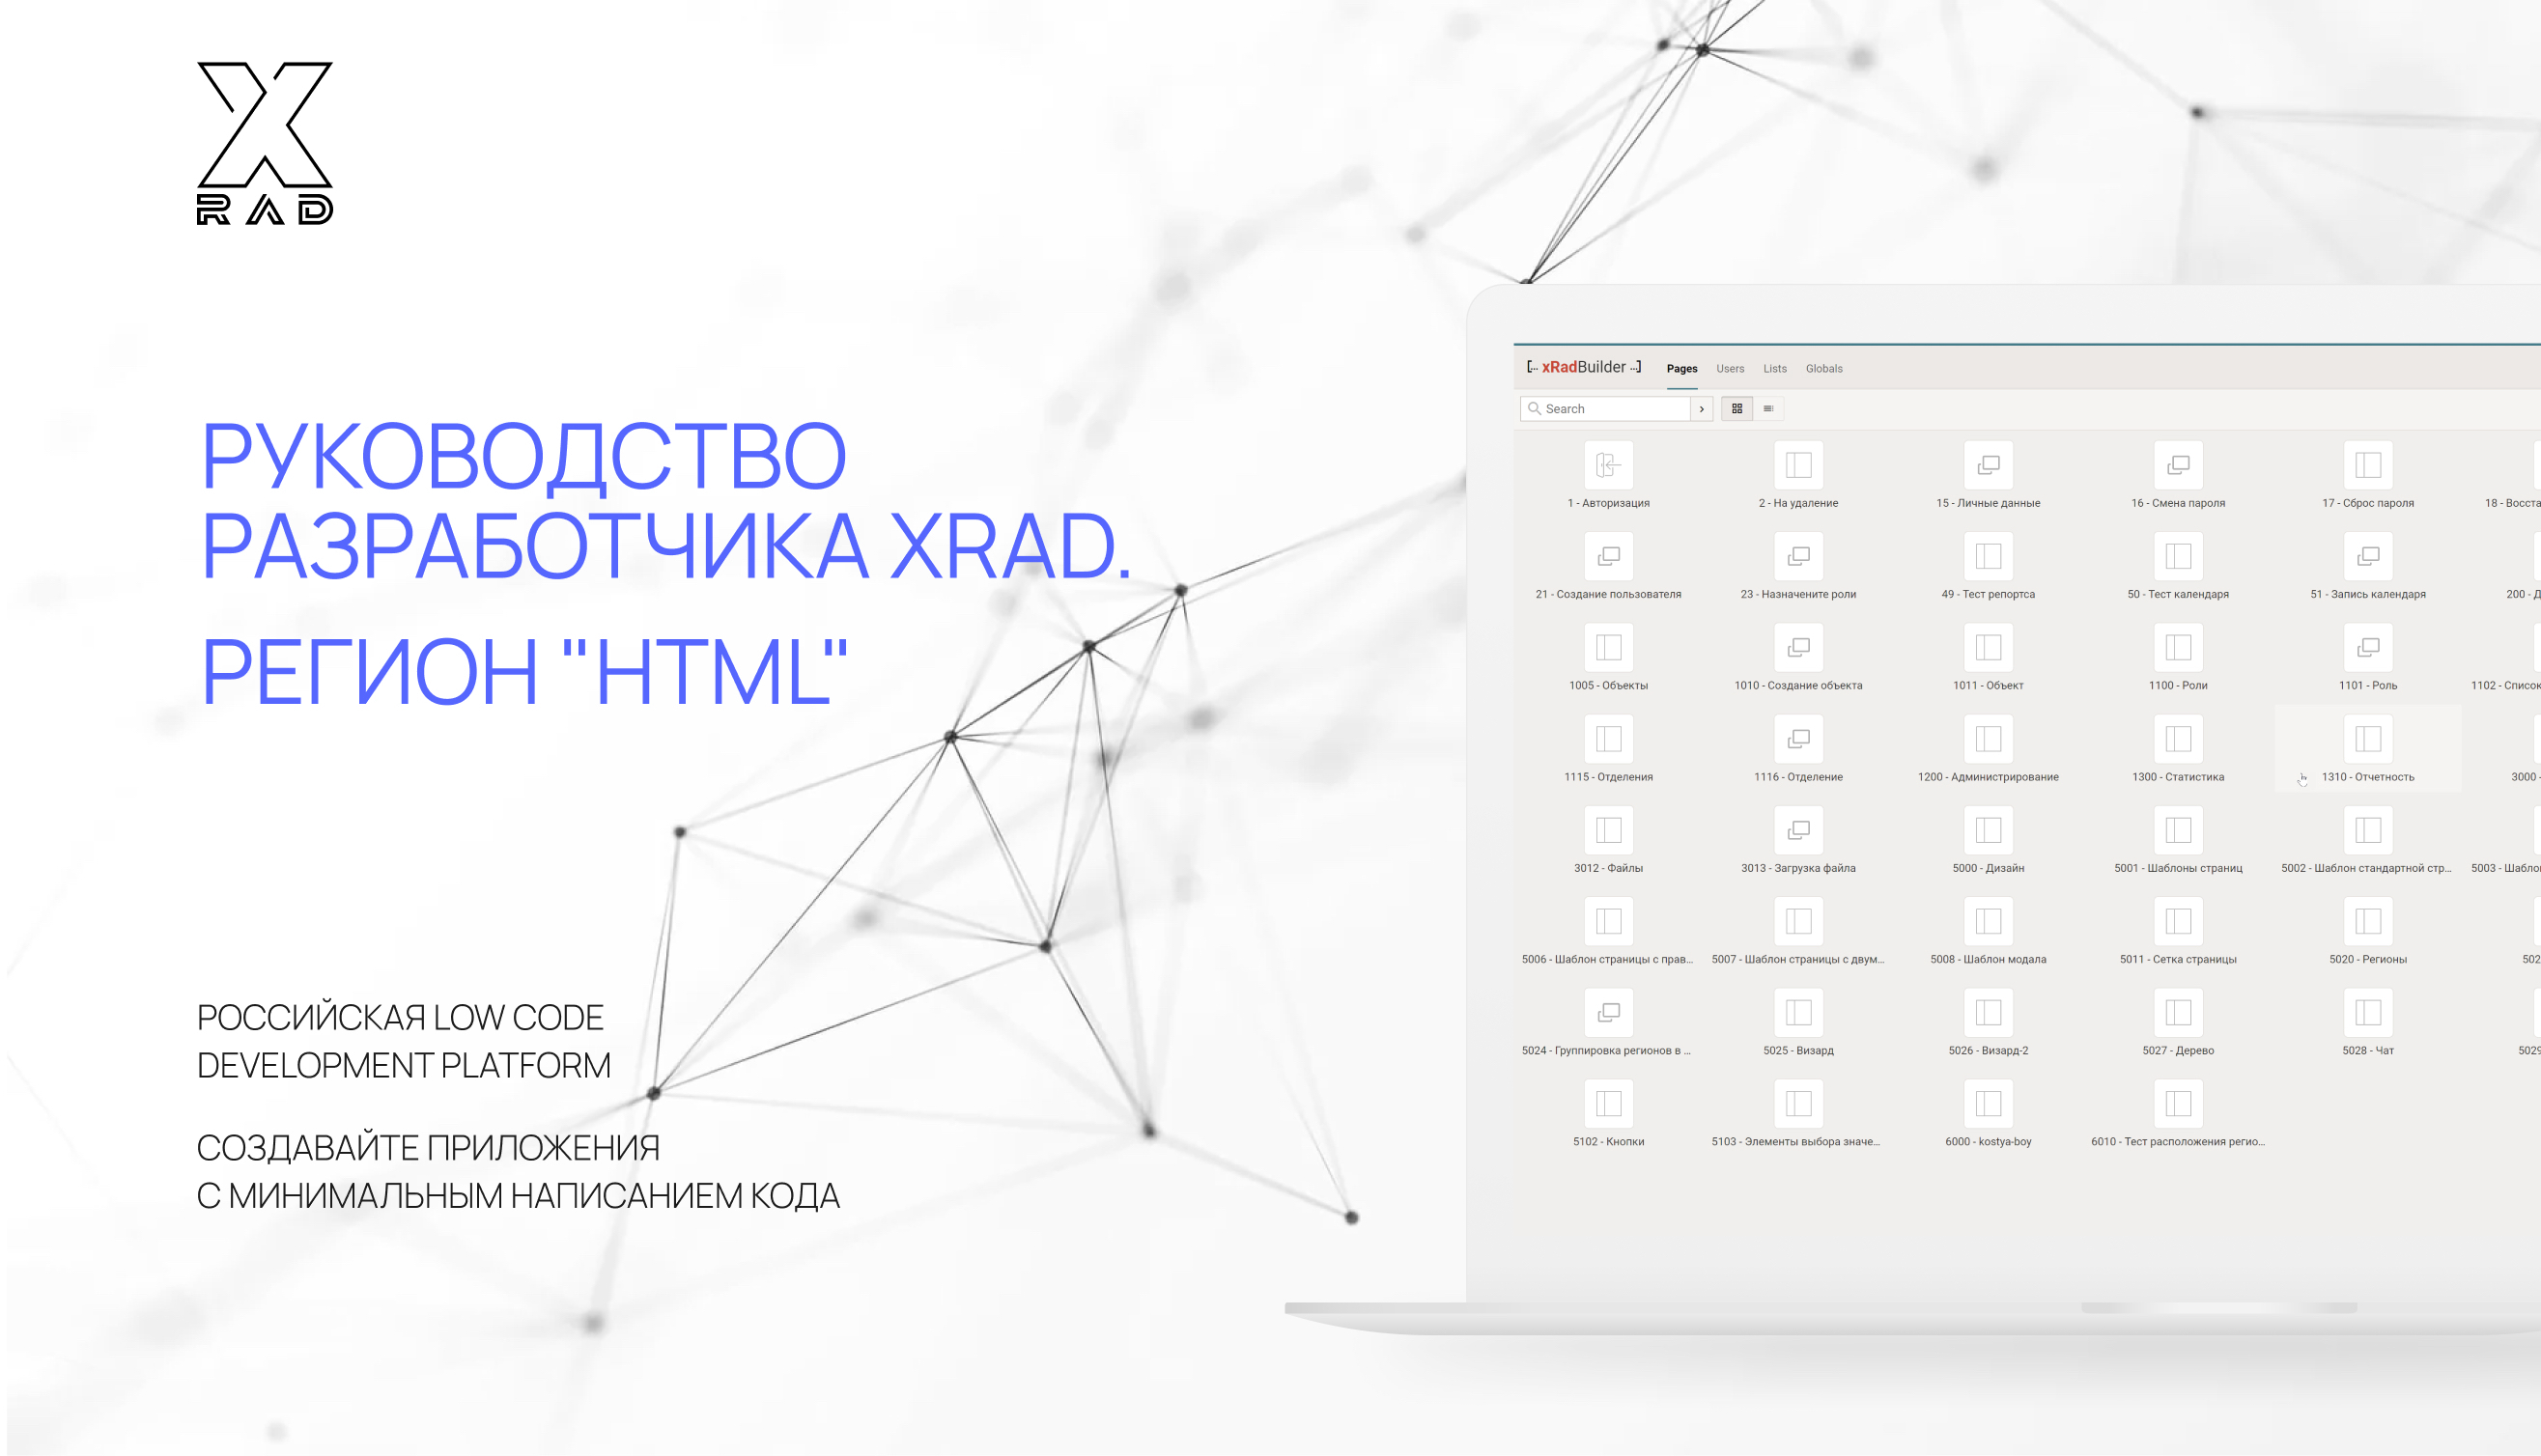 Руководство разработчика XRAD. Регион "HTML"